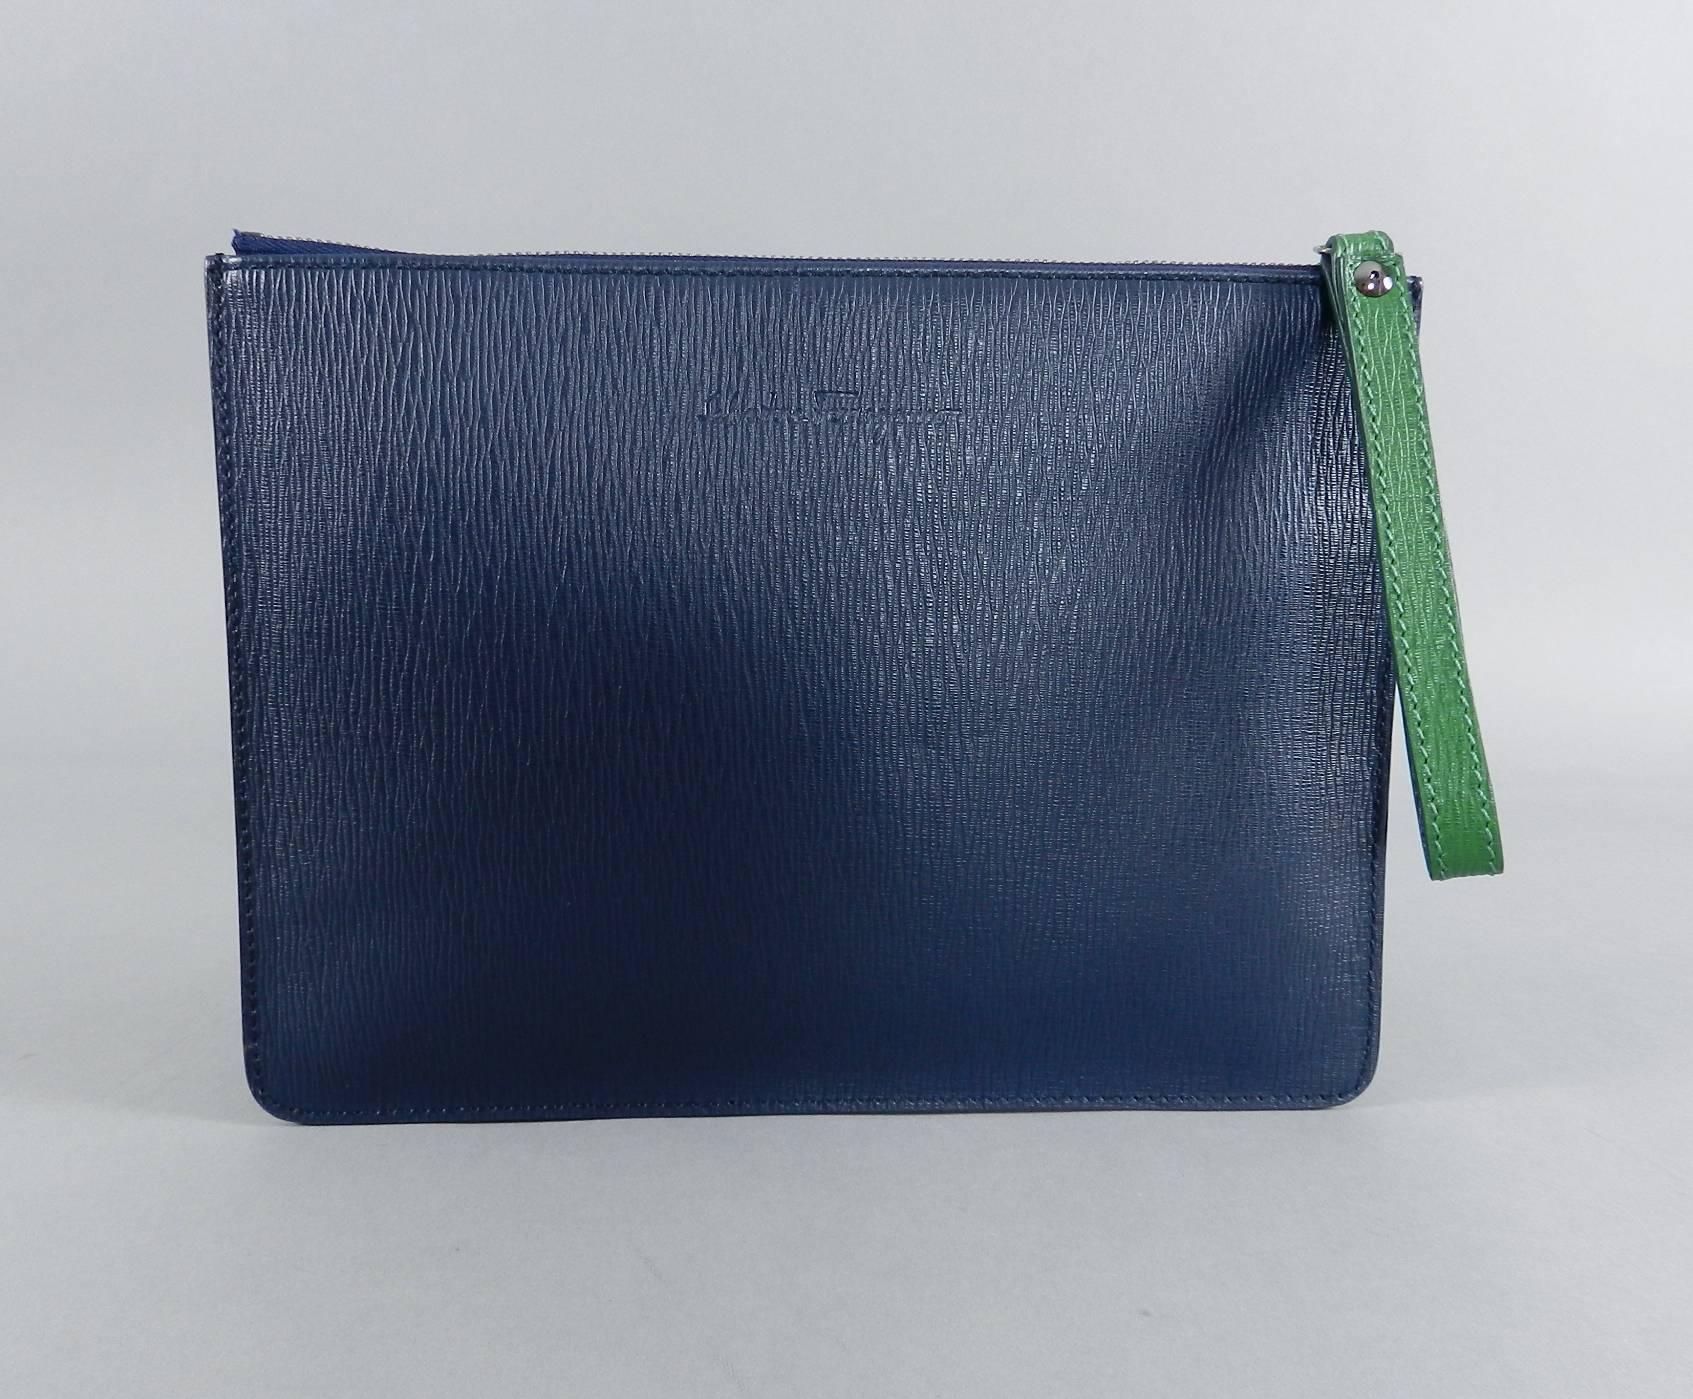 Ferragamo Dark Blue Leather zippered Pouch / Clutch / Document Bag.  Contrasting green trim and wristlet strap.  Dark gunmetal color zipper.  Excellent condition.  Measures 11.25 x 8.25 x 1